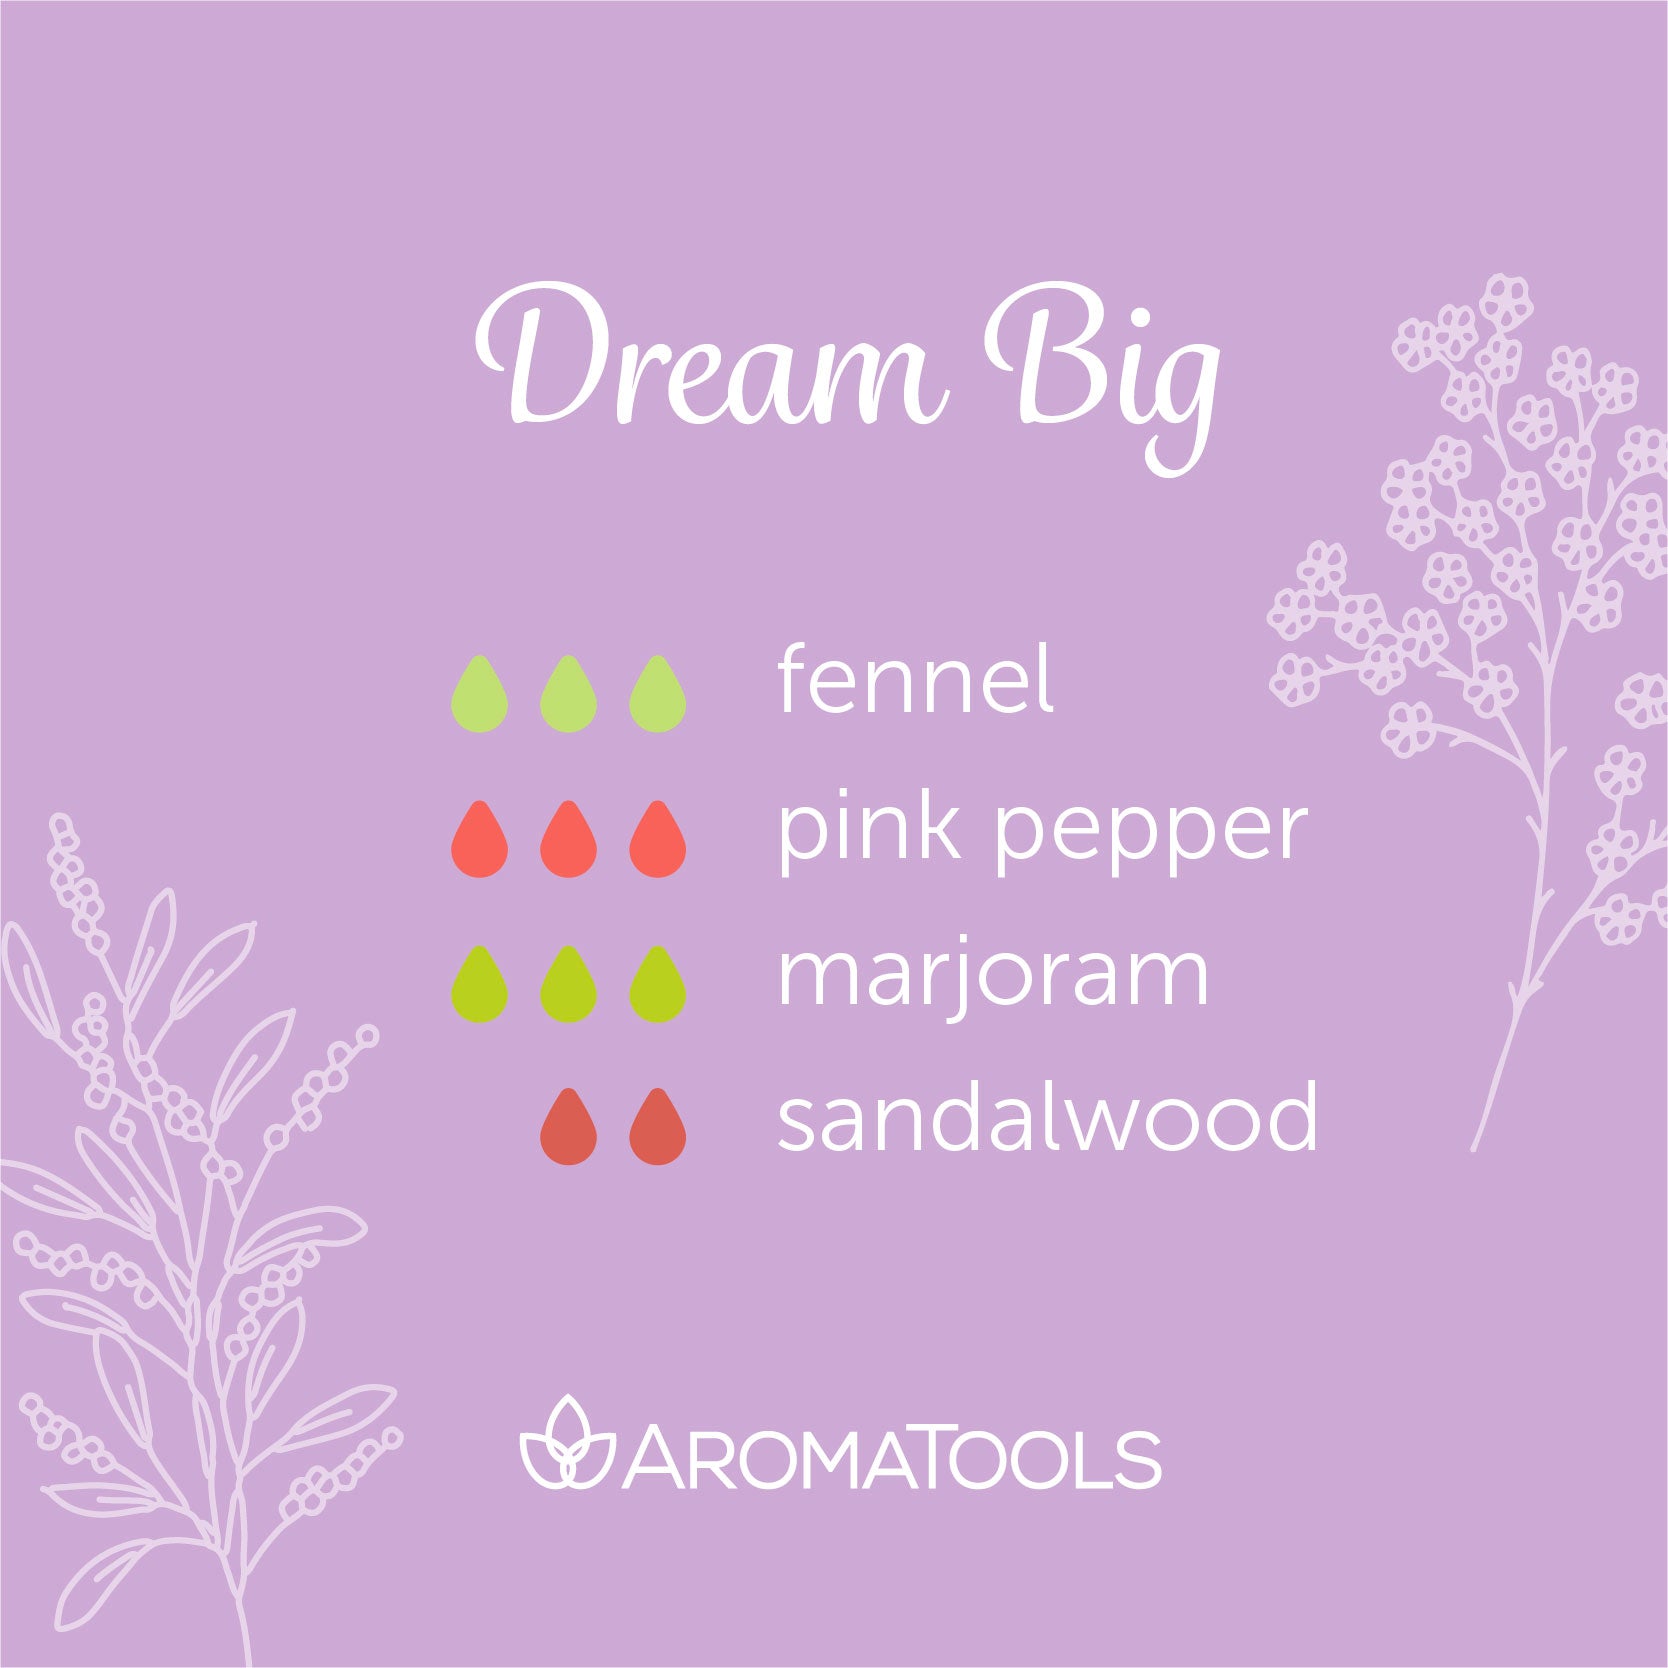 "Dream Big" Diffuser Blend. Features fennel, pink pepper, marjoram and sandalwood essential oils.